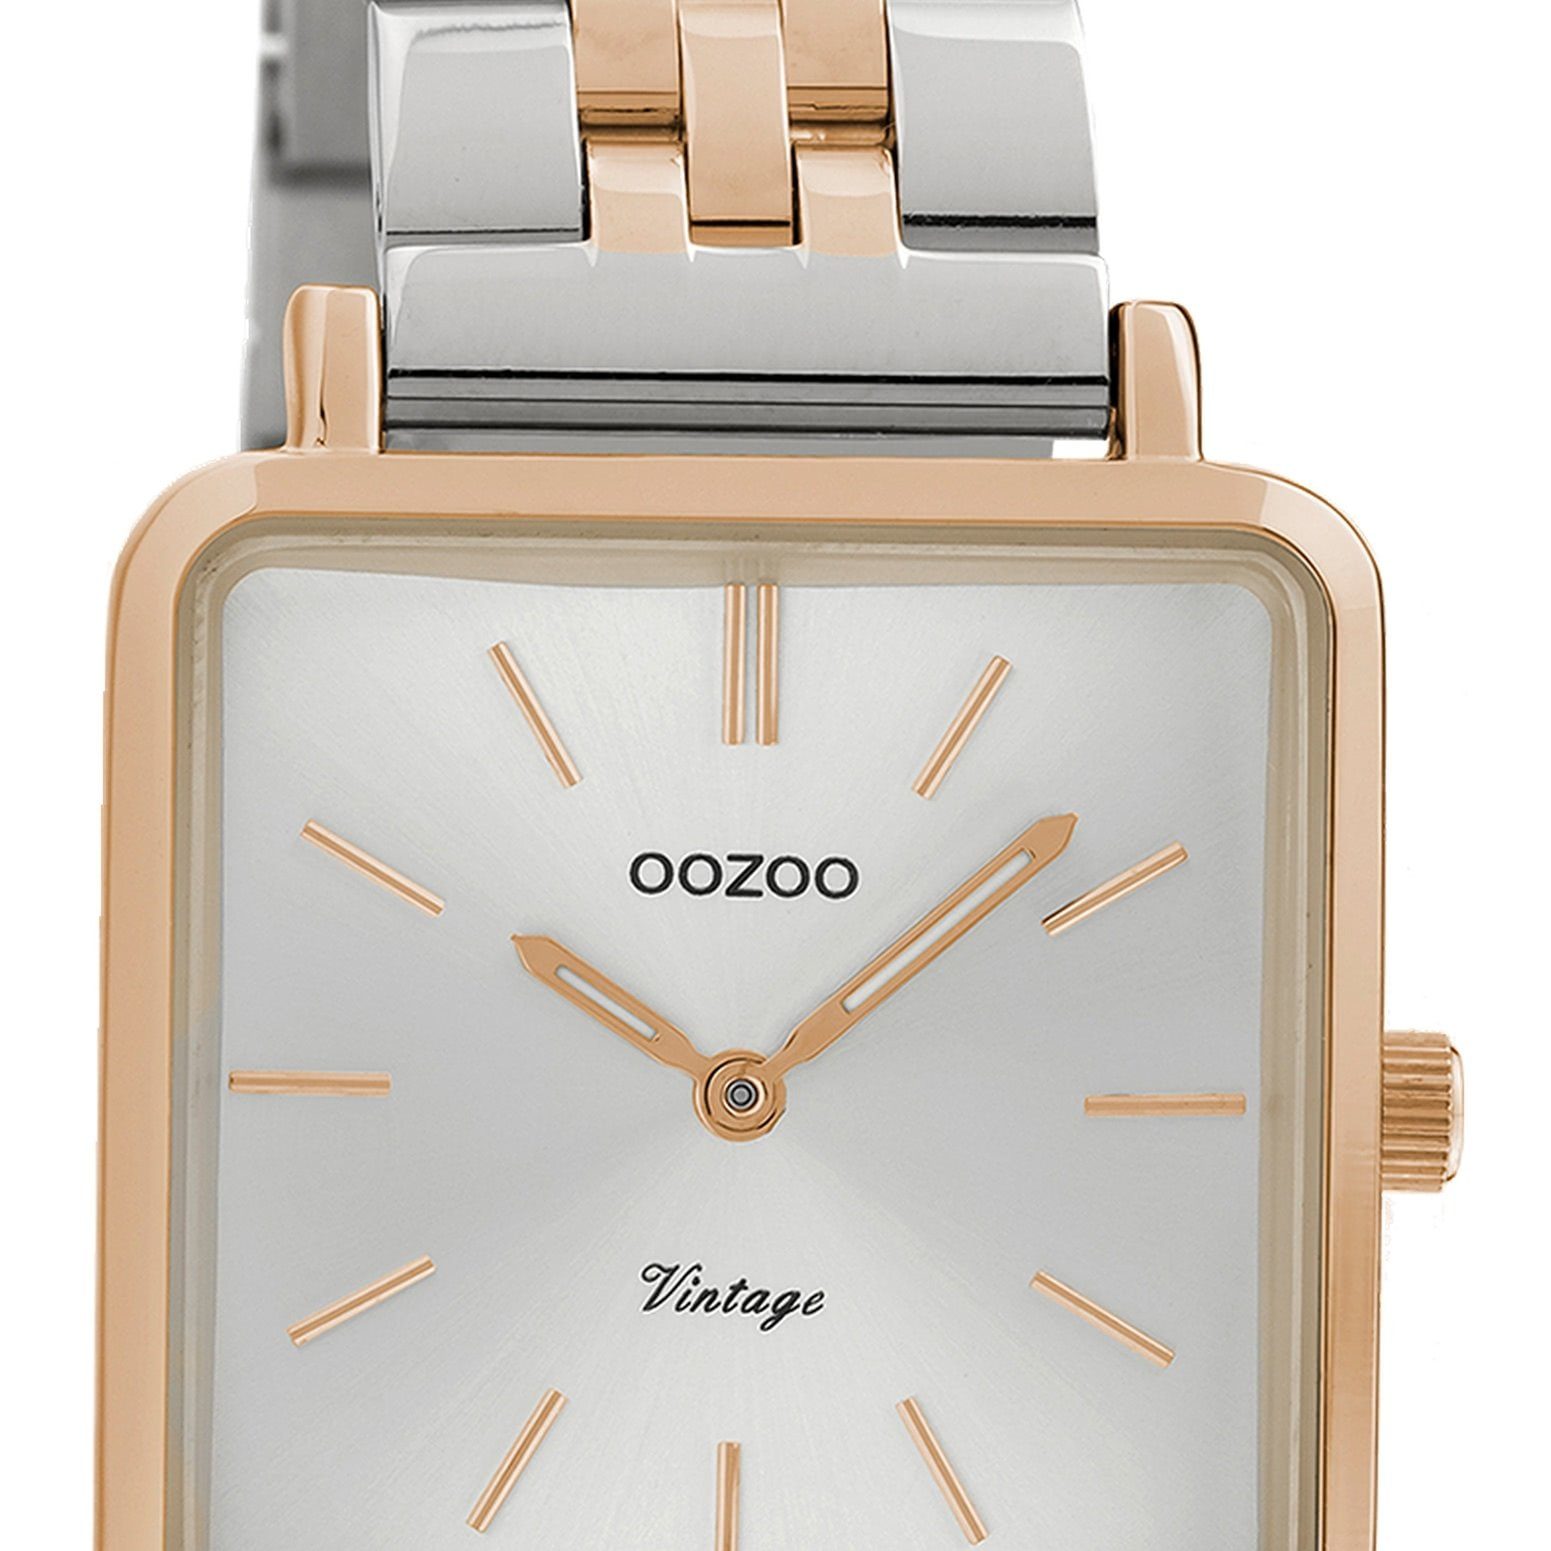 OOZOO Quarzuhr Oozoo Damen Armbanduhr eckig, Edelstahlarmband, 29mm) silber Damenuhr Fashion-Style klein (ca. rosegold